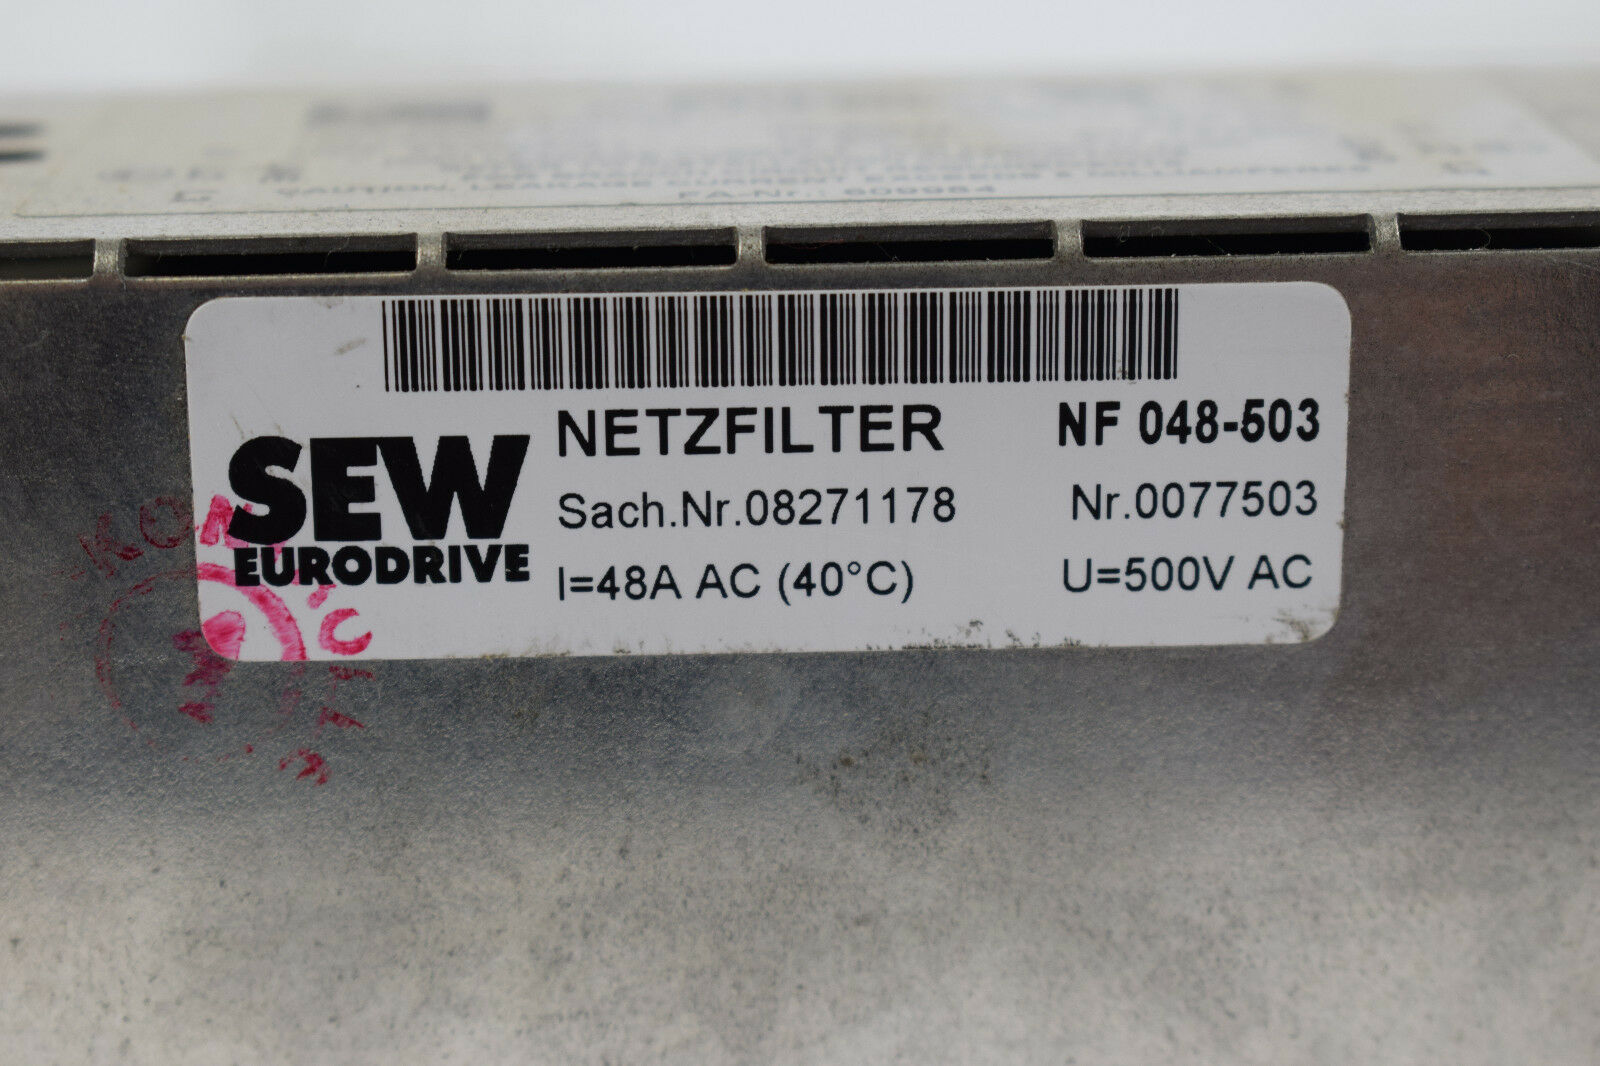 SEW Eurodrive Netzfilter EMI-Filter HLD 110-500/42 ( NF 048-503 )